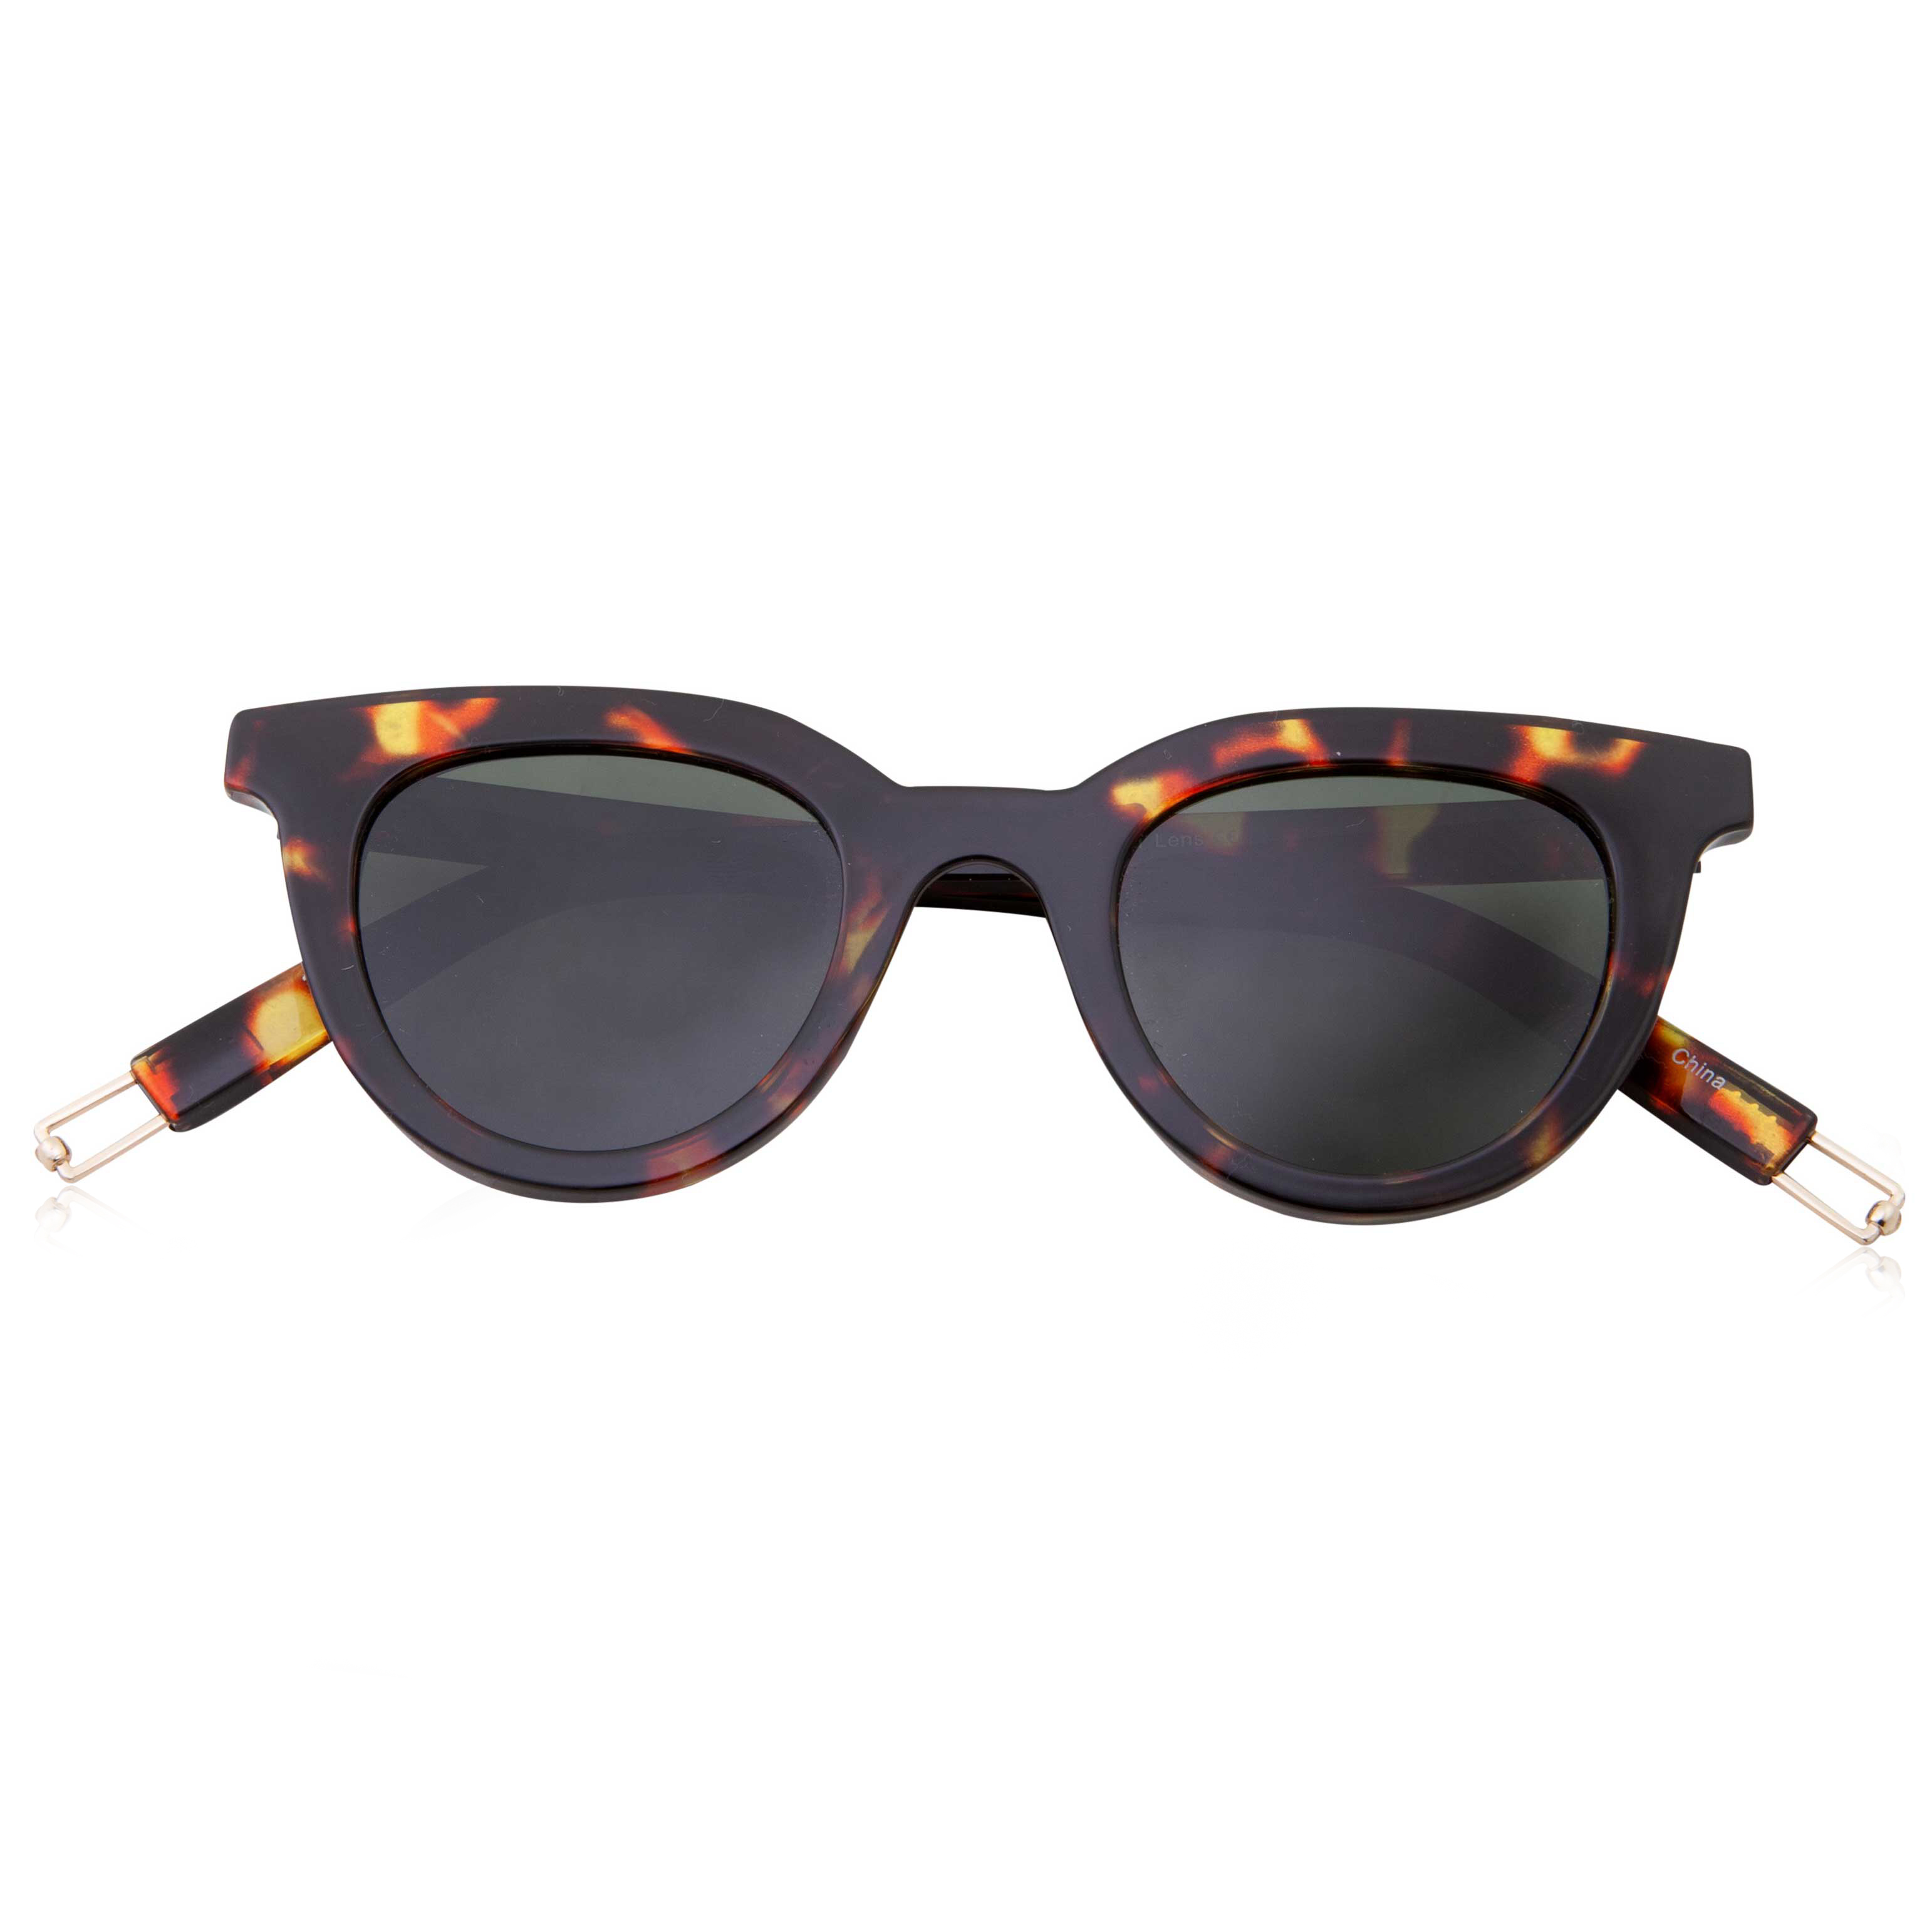 grinderPUNCH Vintage Inspired Horned Rim Tortoise Plastic Frame Round Sunglasses - image 2 of 5